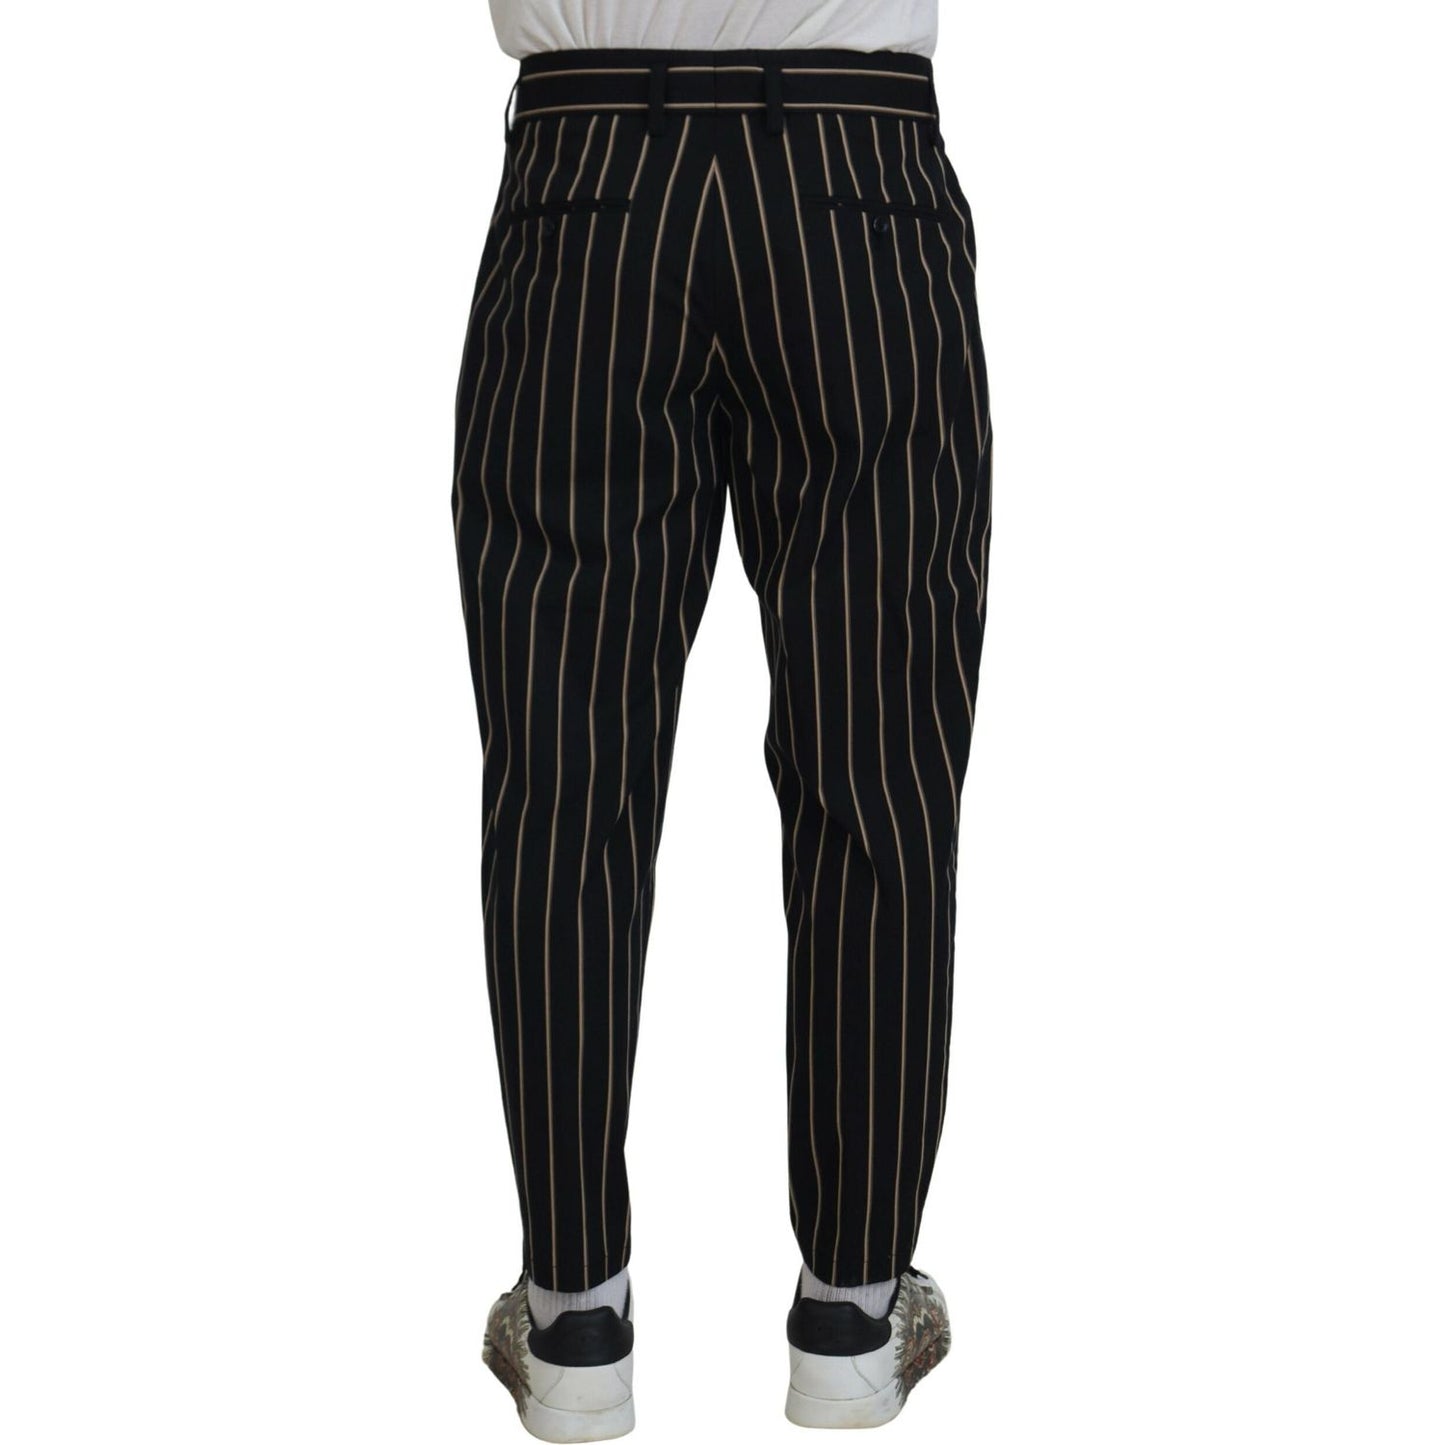 Dolce & Gabbana Elegant Striped Chino Tapered Pants black-beige-striped-cotton-stretch-pants